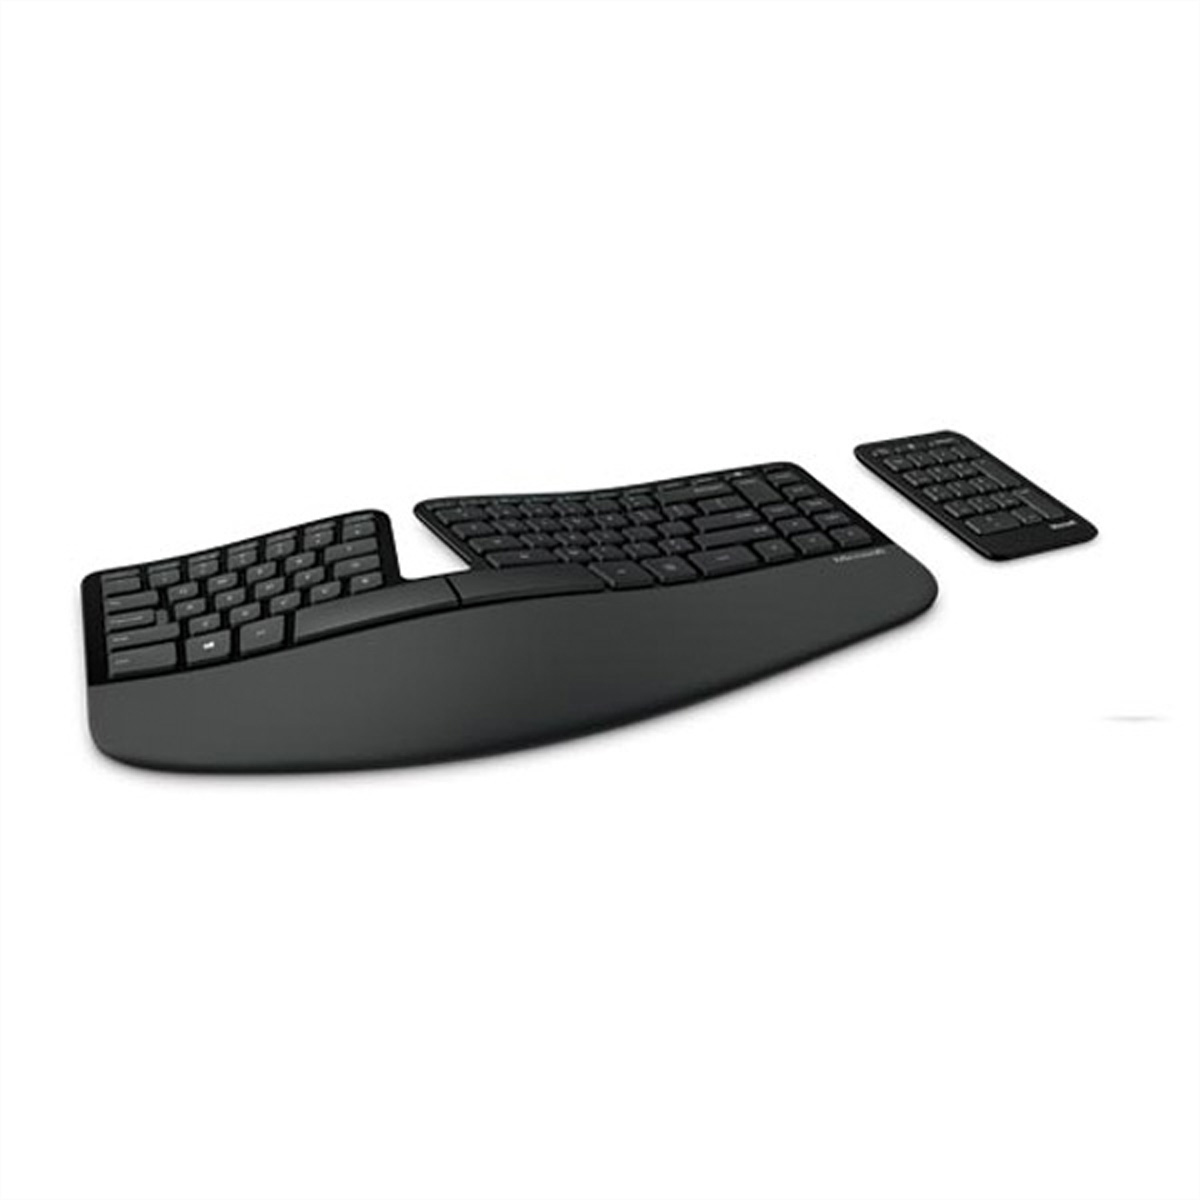 Microsoft Sculpt Ergonomic Keyboard for Business